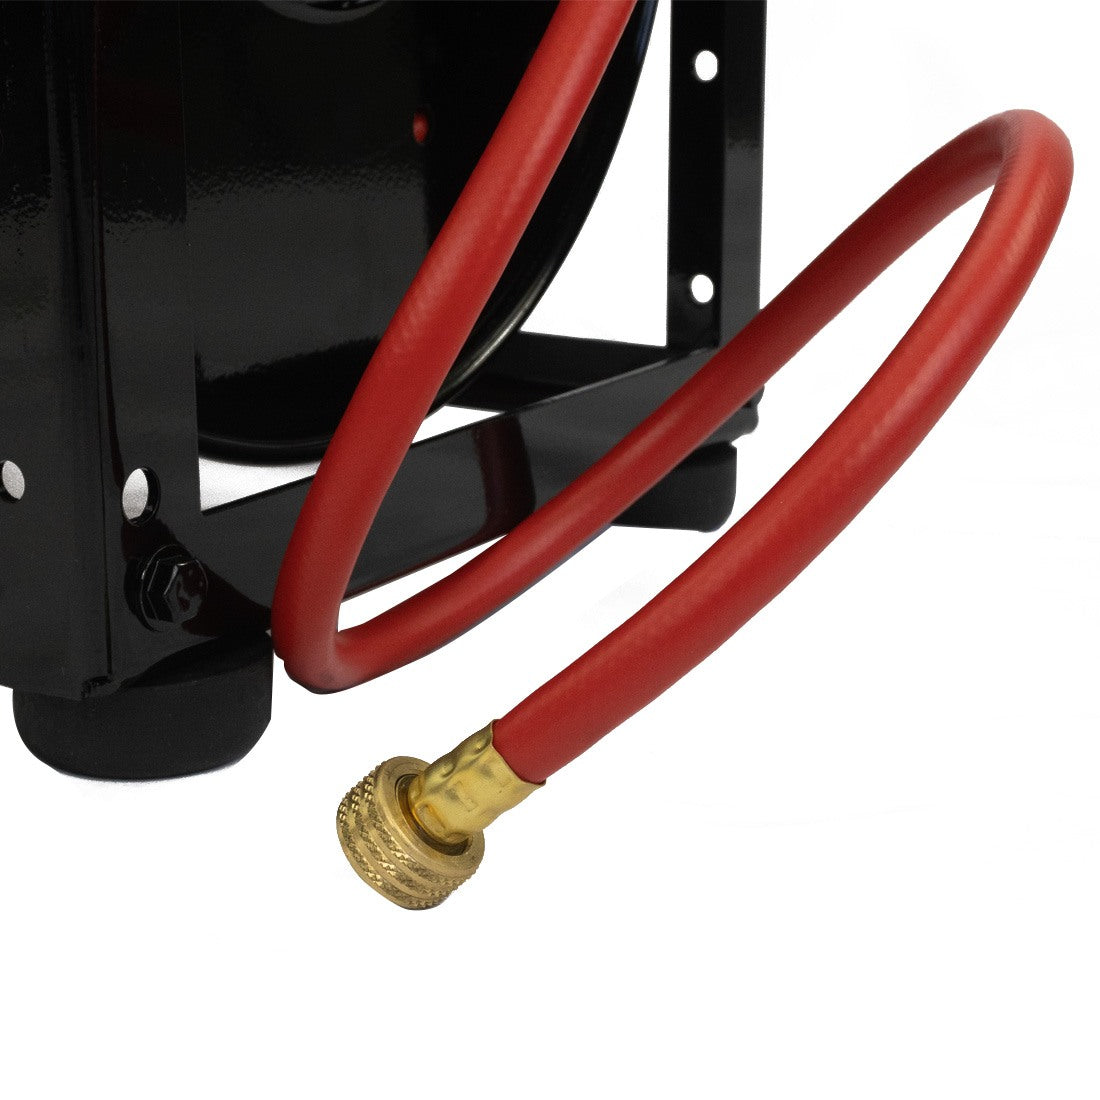 basics air compressor hose reel and portable electric